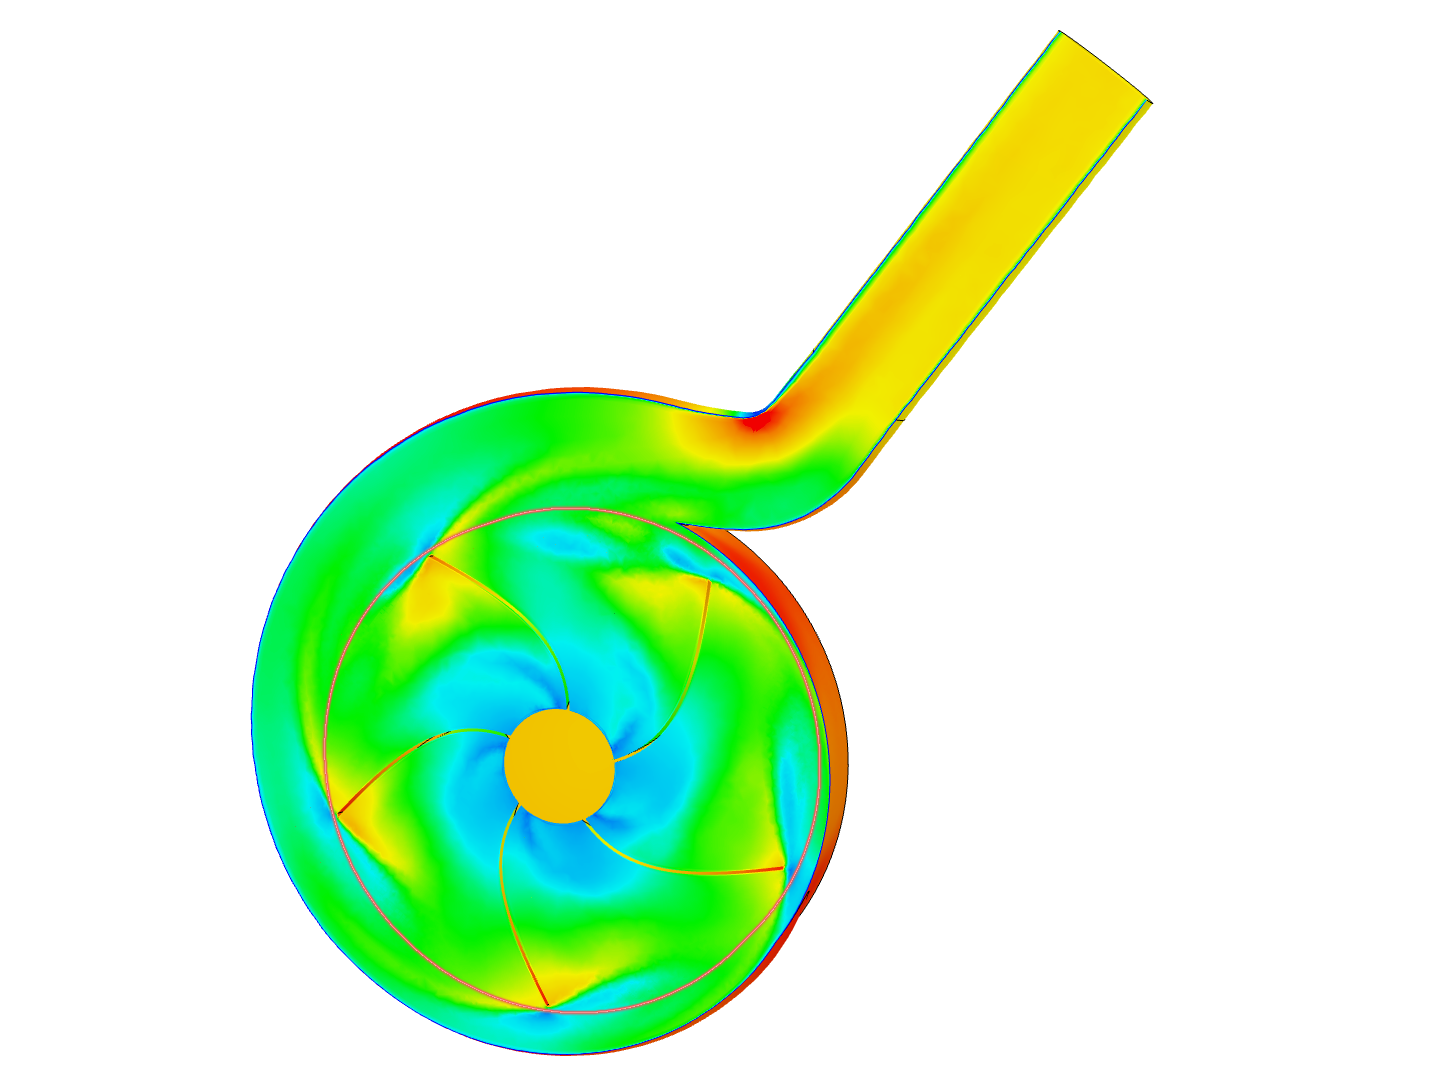 Pump simulation on Simscale image